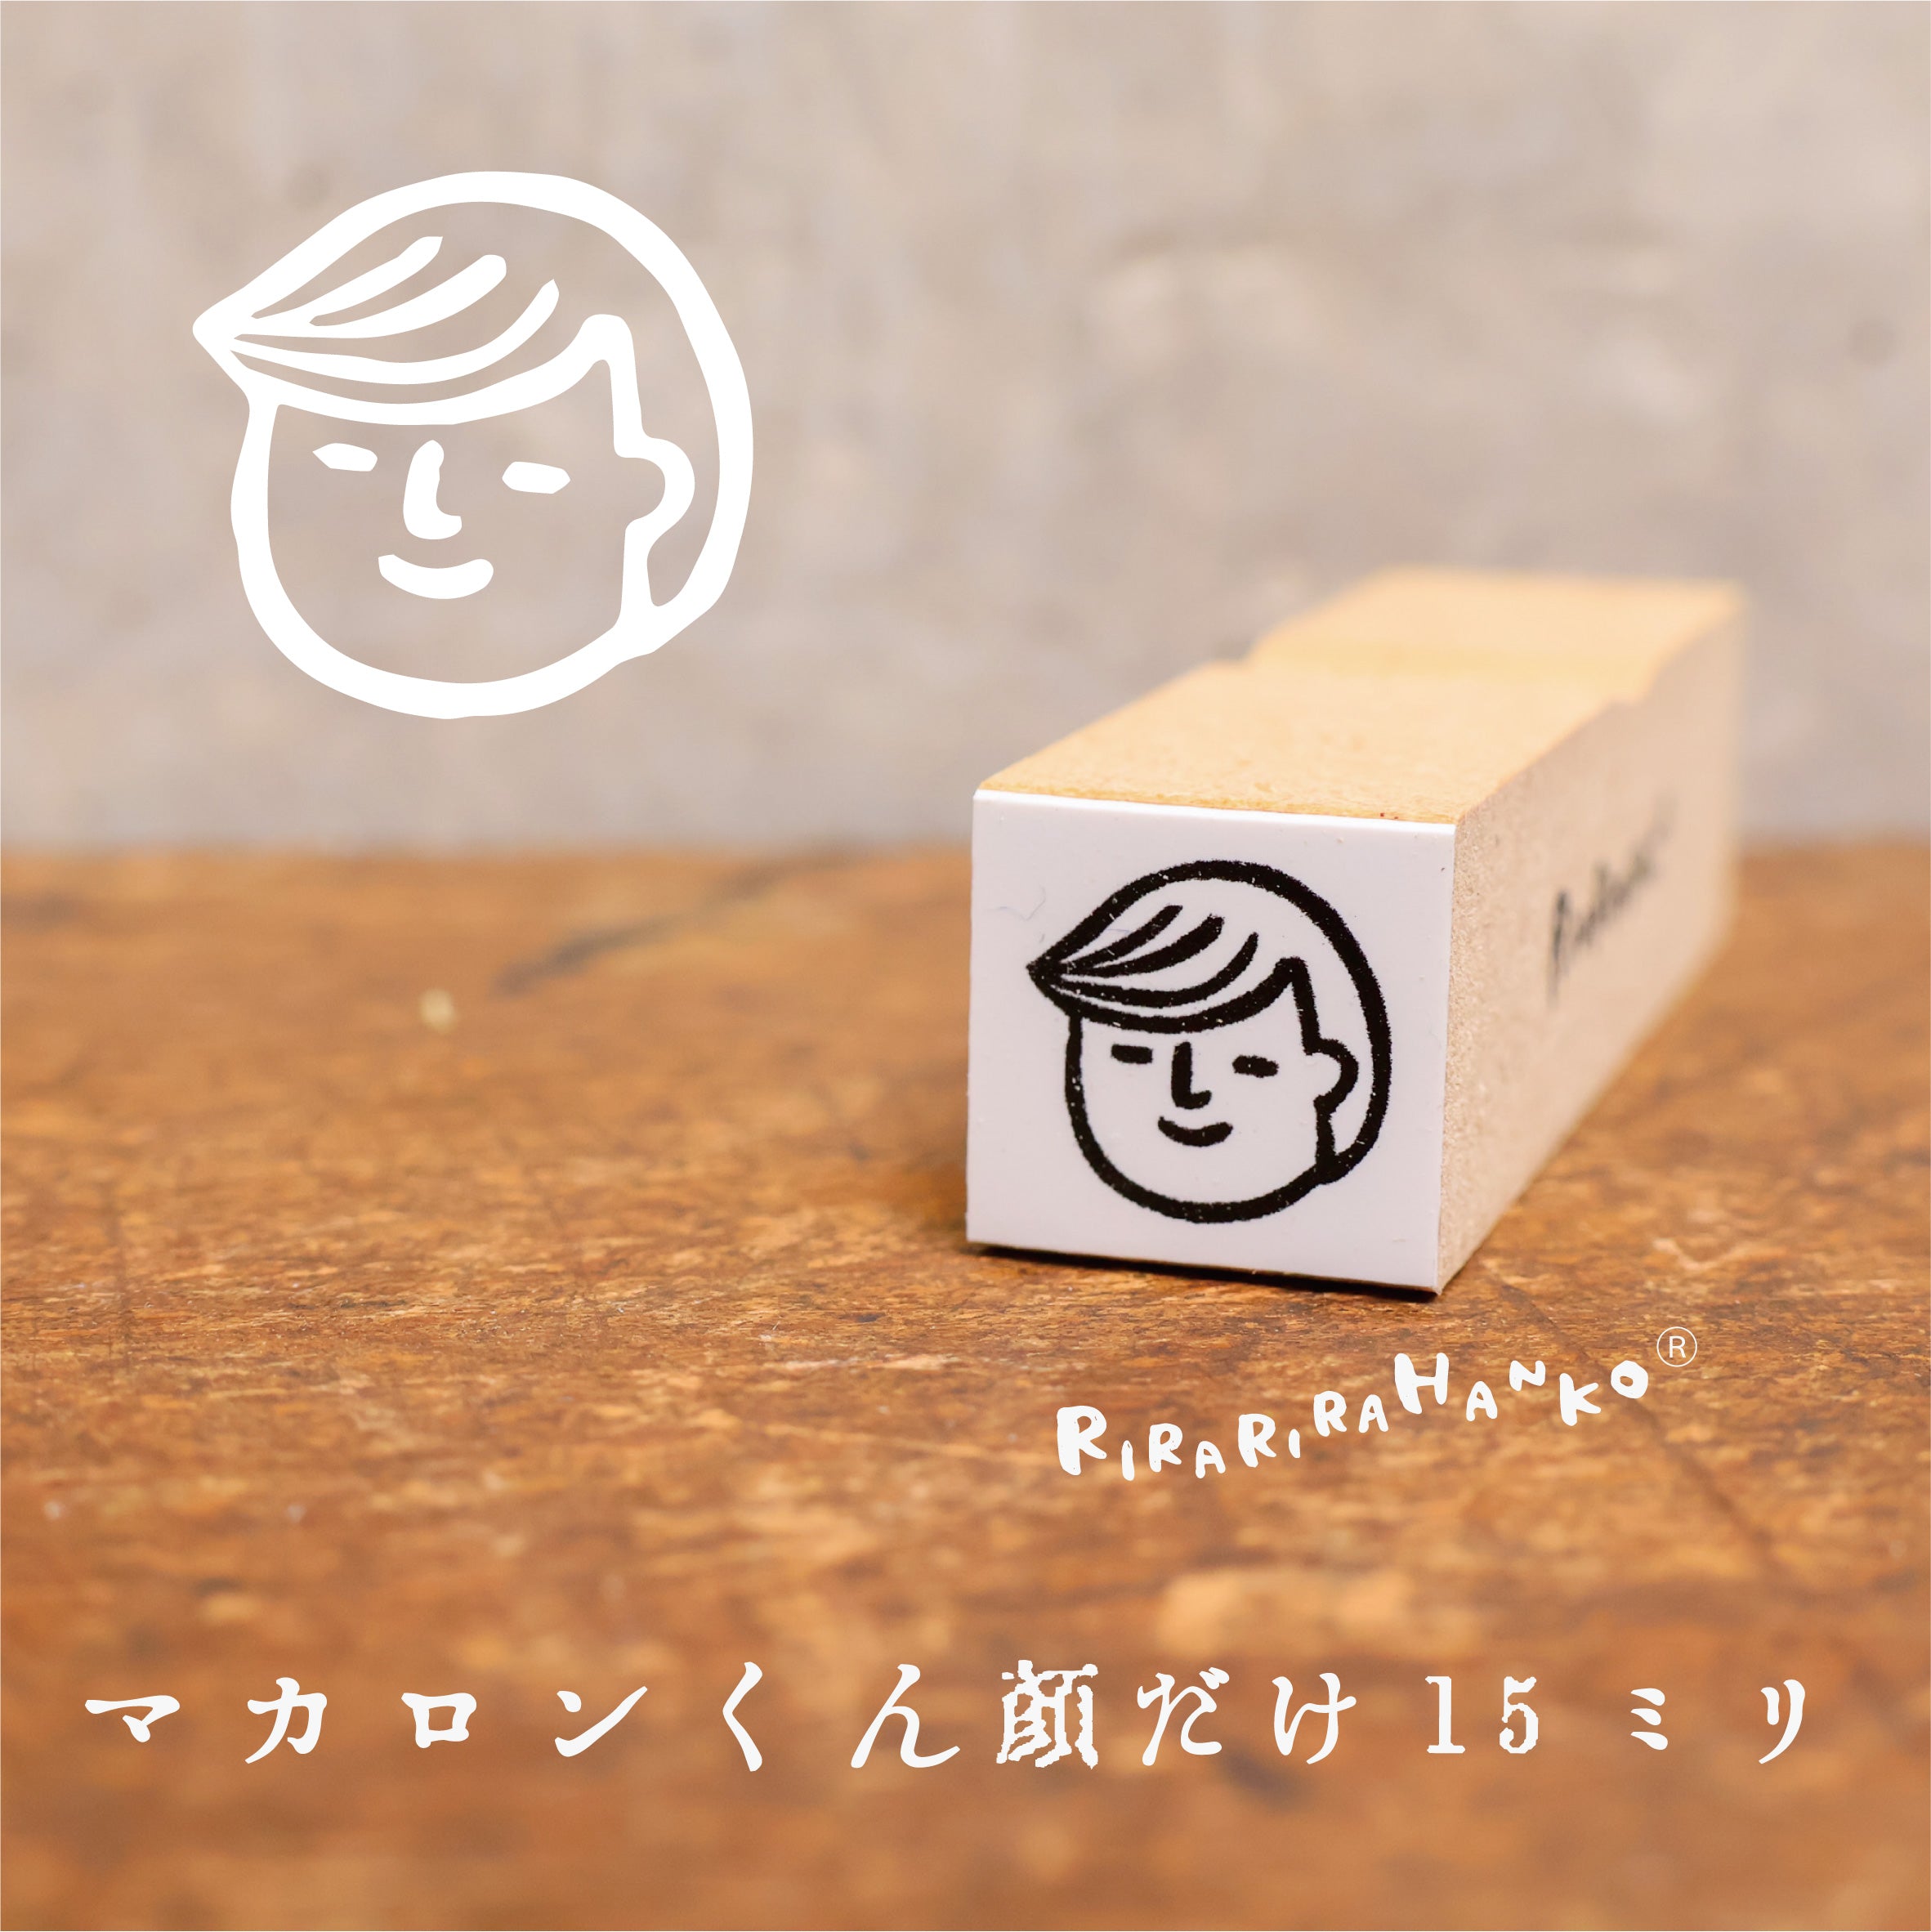 Macaron-kun Face Stamp